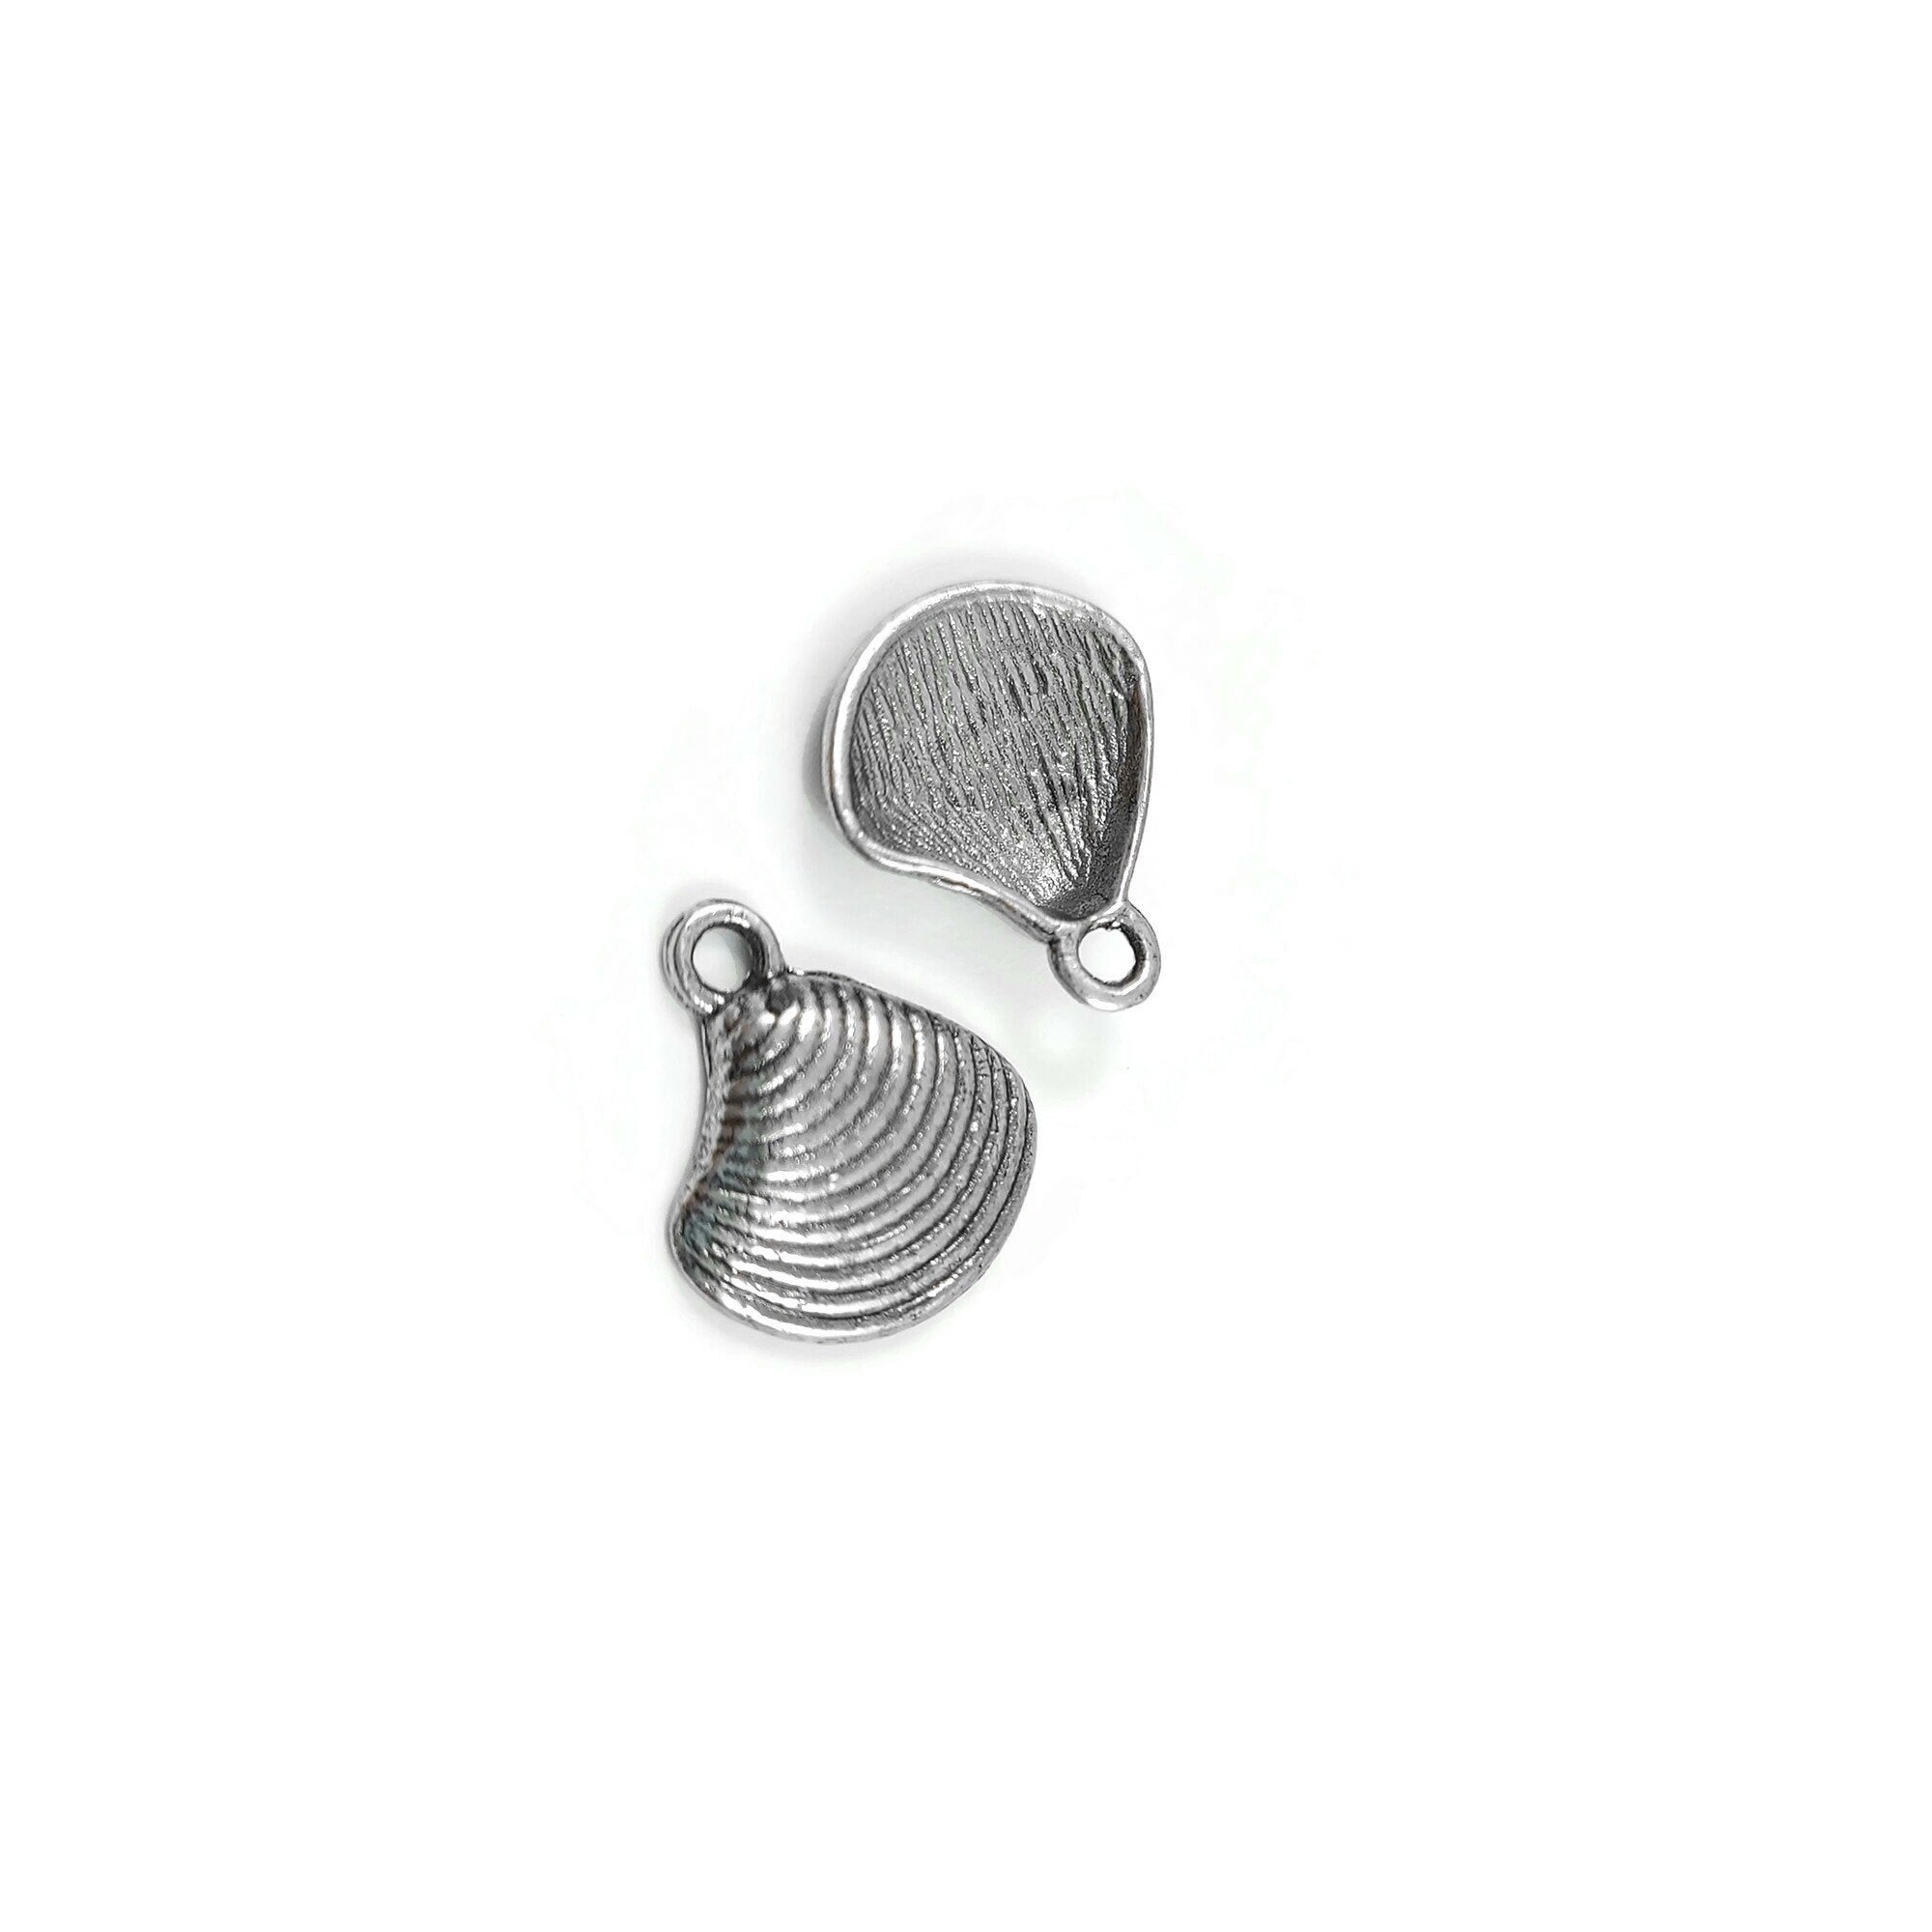 Cute sea shell charms, 15mm nickel free ocean pendants, Hypoallergenic nautical jewelry making